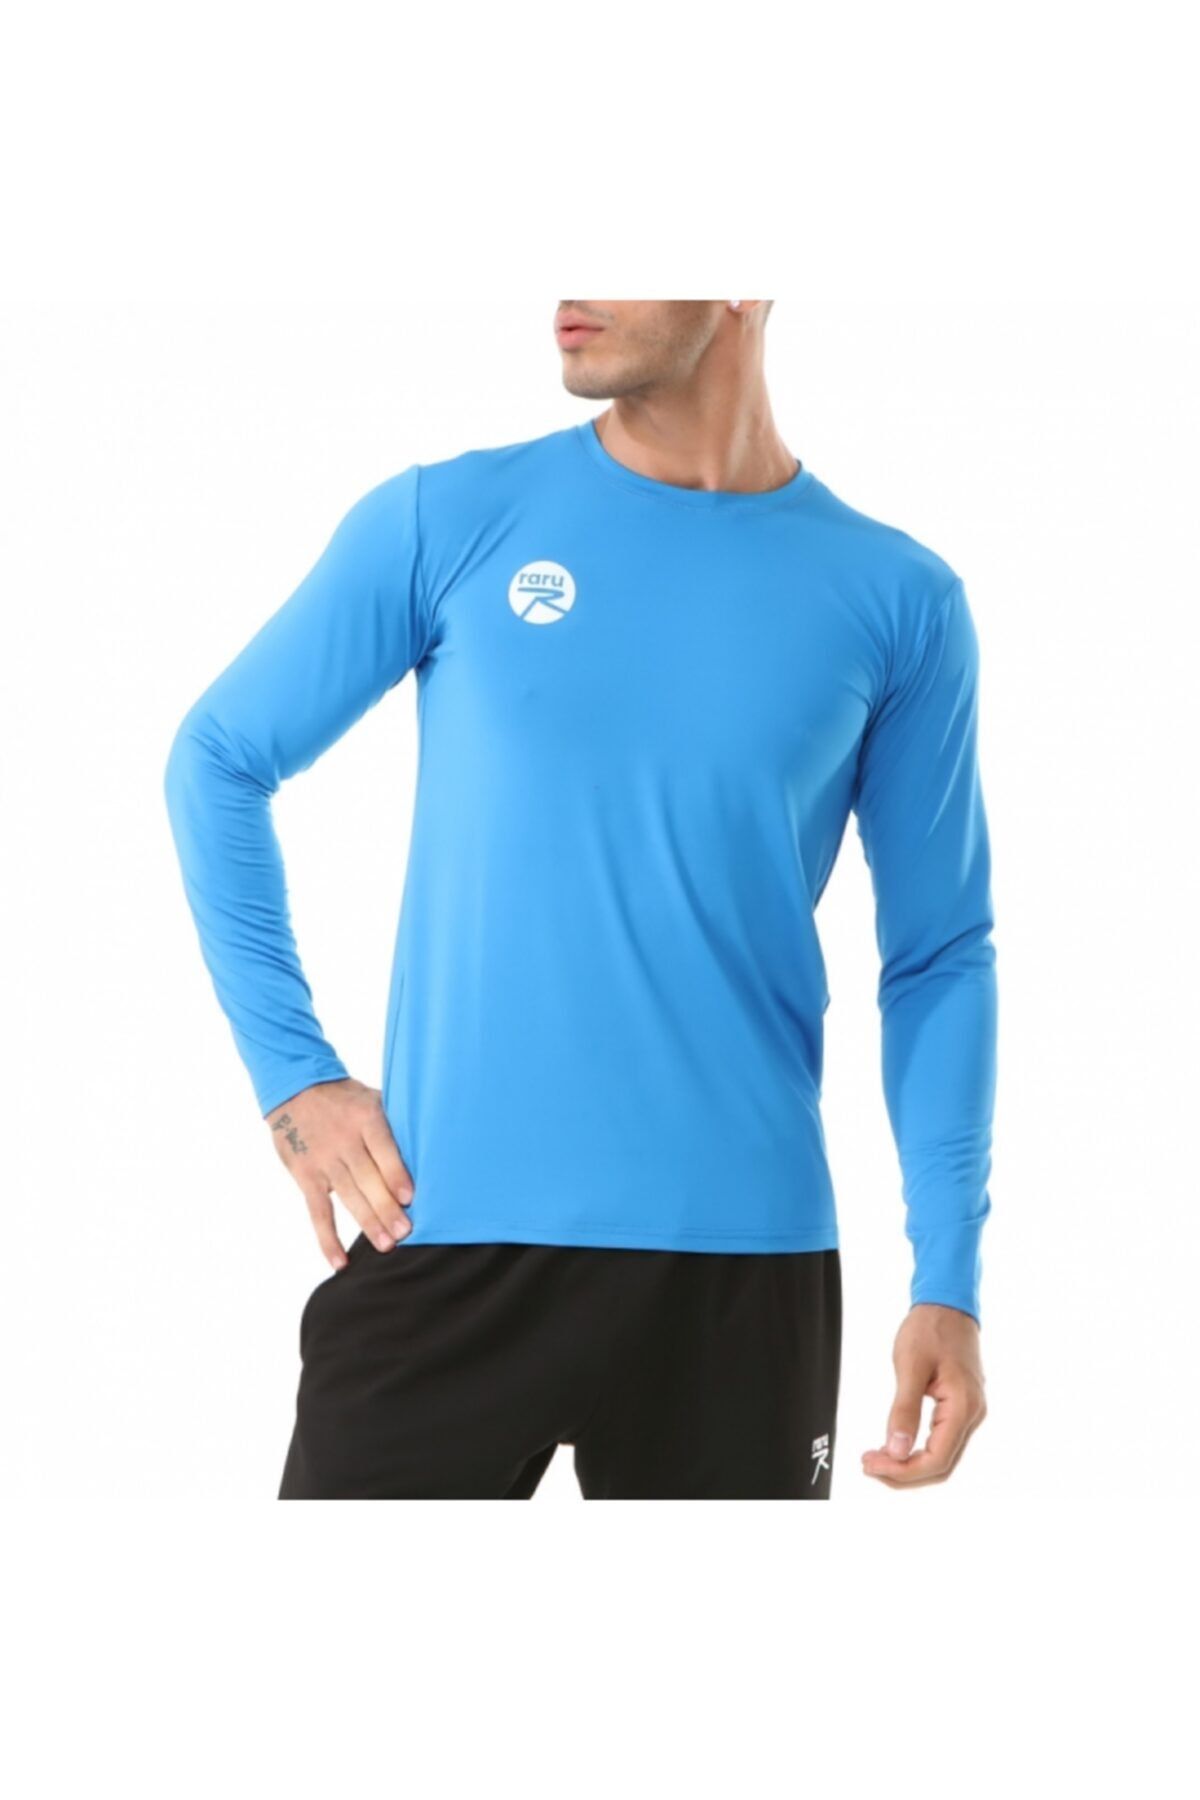 raru Erkek Uzun Kollu Teknik Performans Spor T-shirt Vıvus Mavi